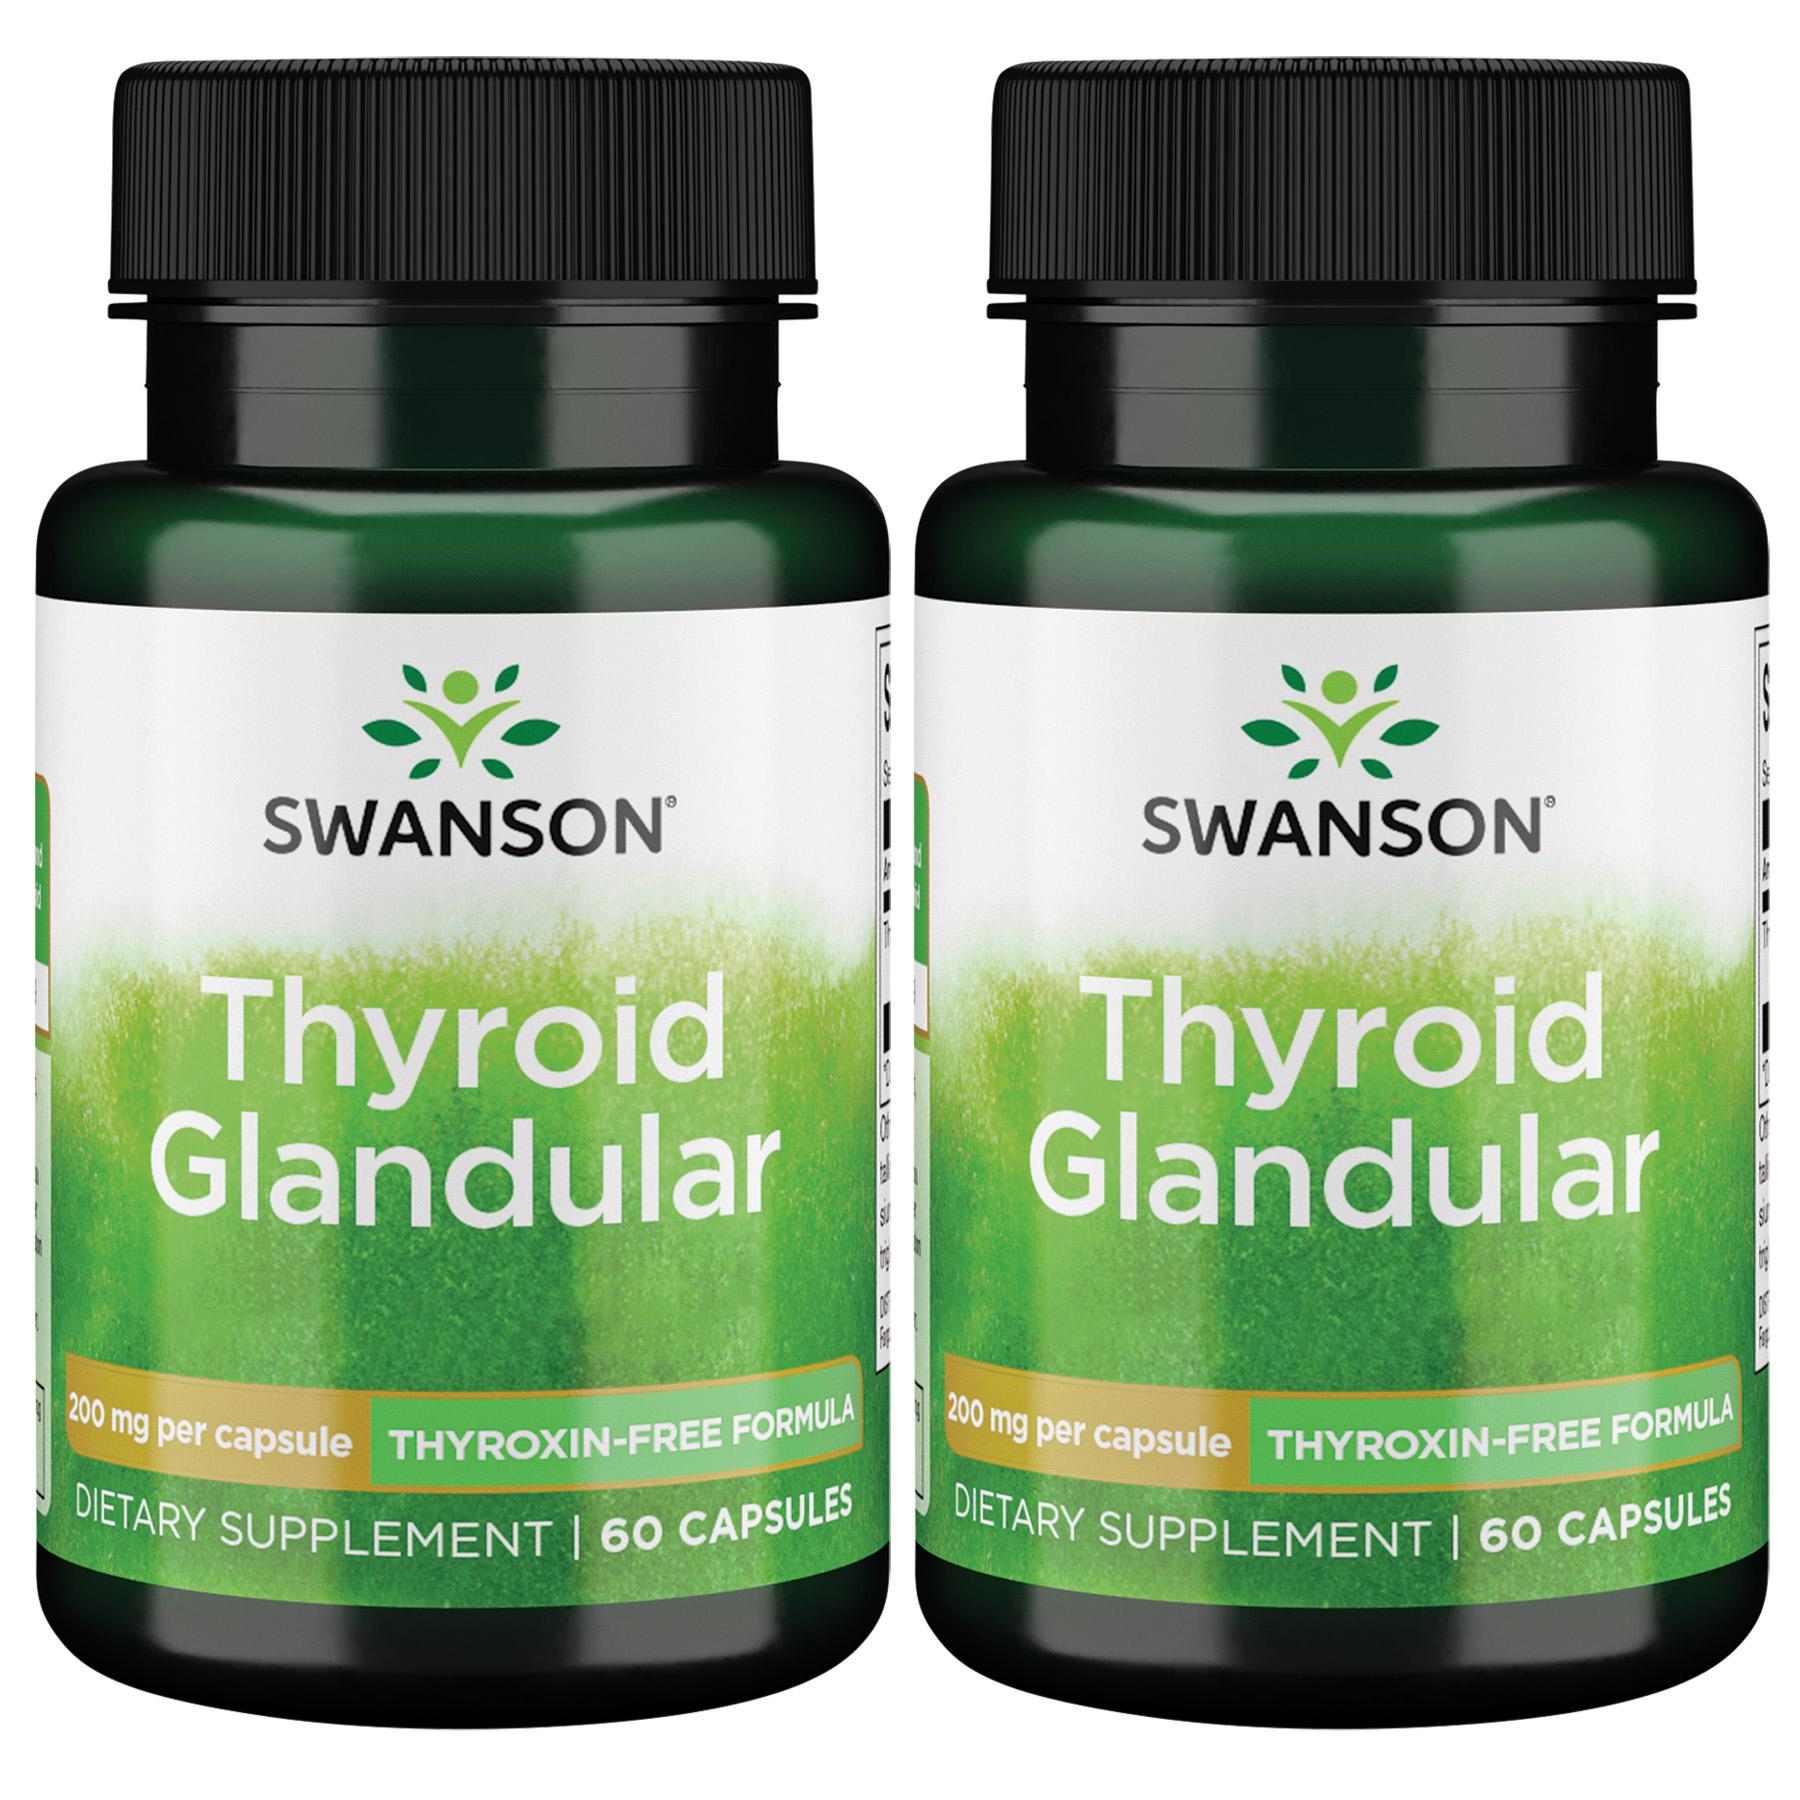 Swanson Premium Thyroid Glandular - Thyroxin-Free Formula 2 Pack Supplement Vitamin 200 mg 60 Caps